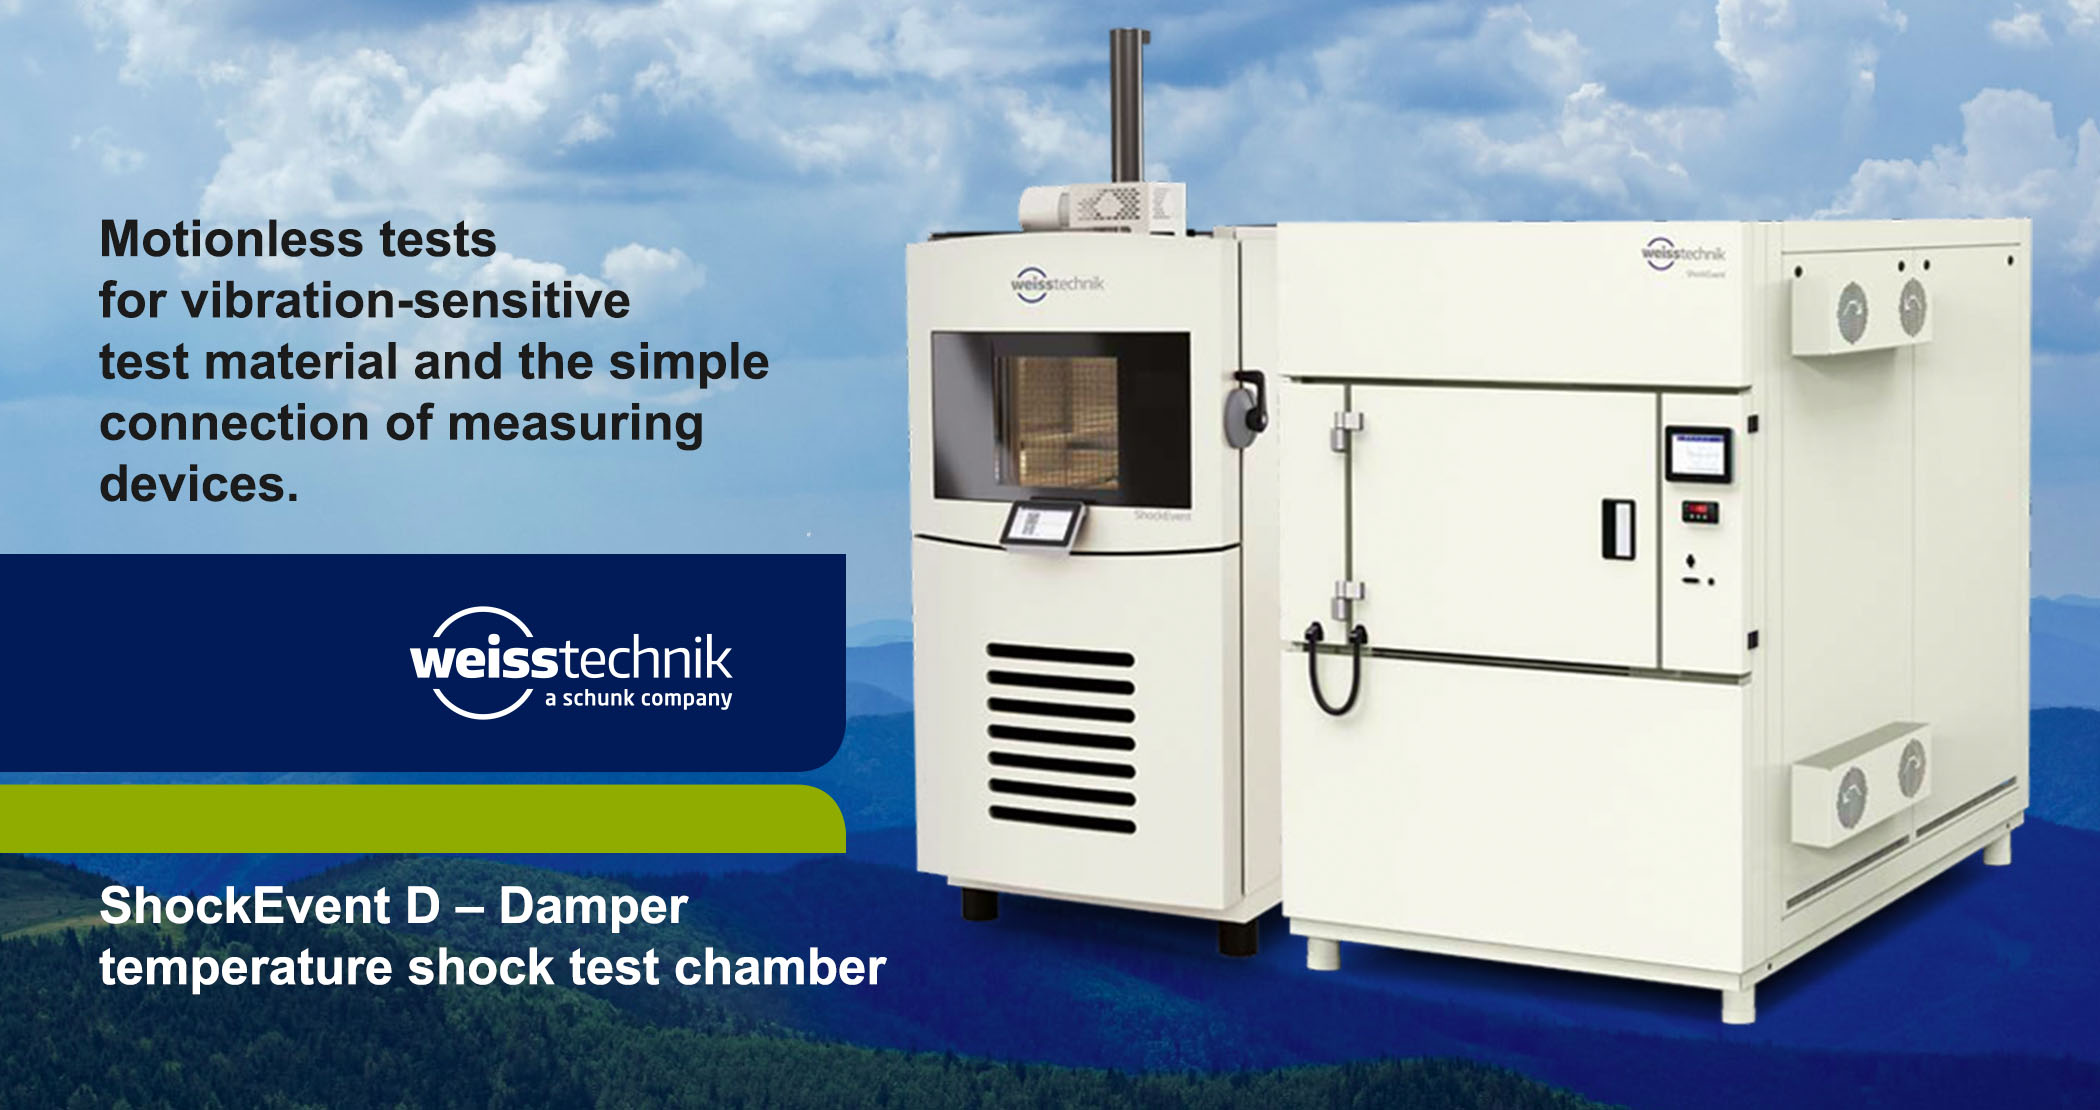 ShockEvent D temperature shock test chamber